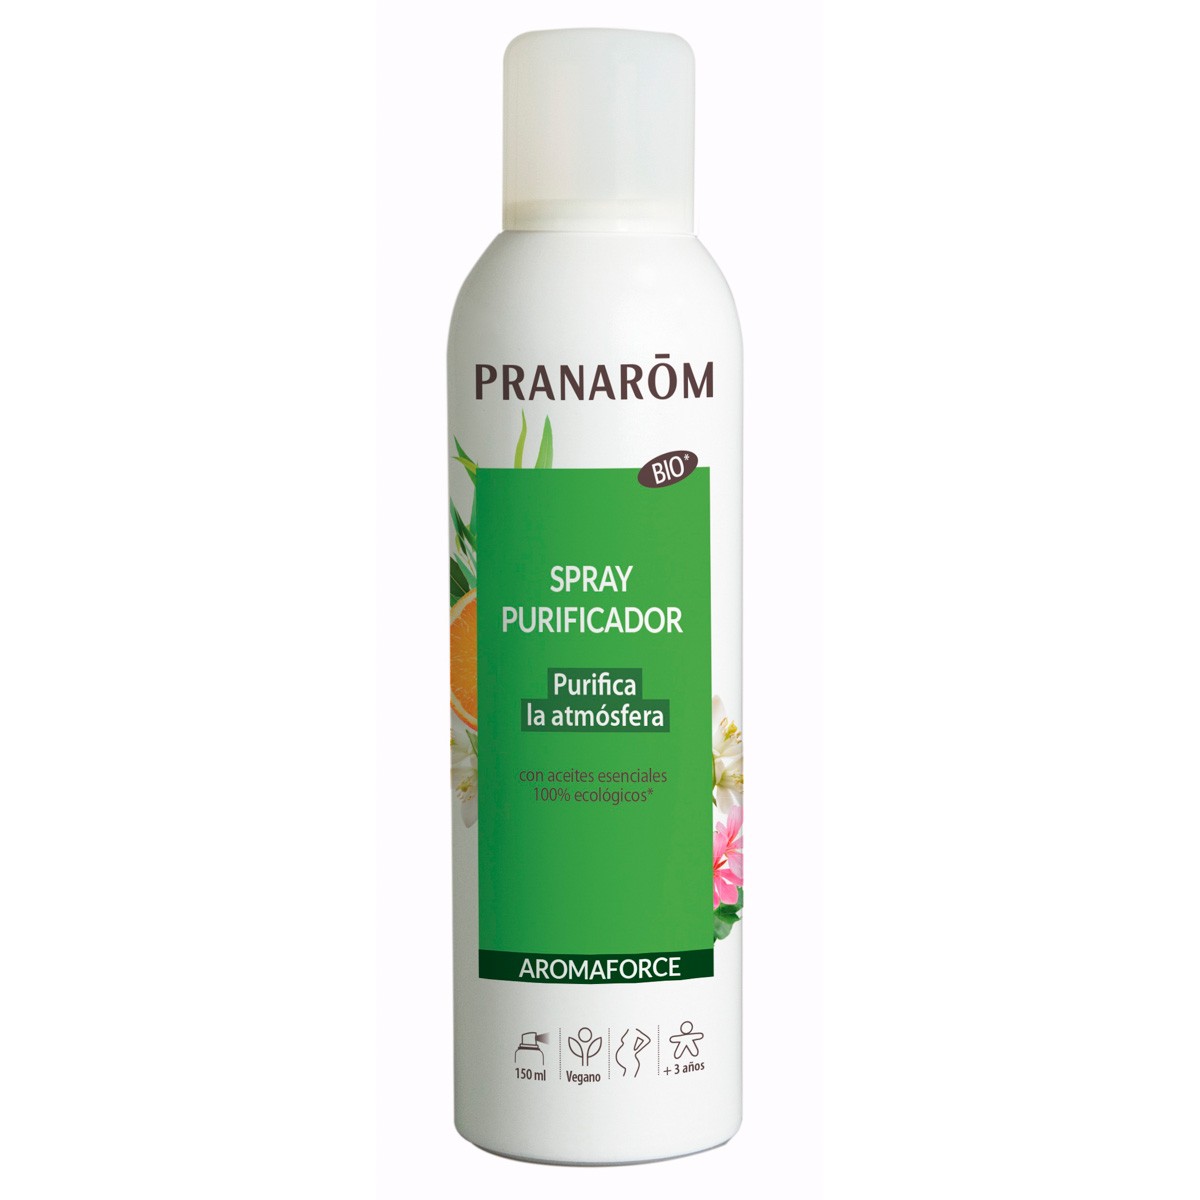 Pranarom Aromaforce purifi naranj spray bio 150ml